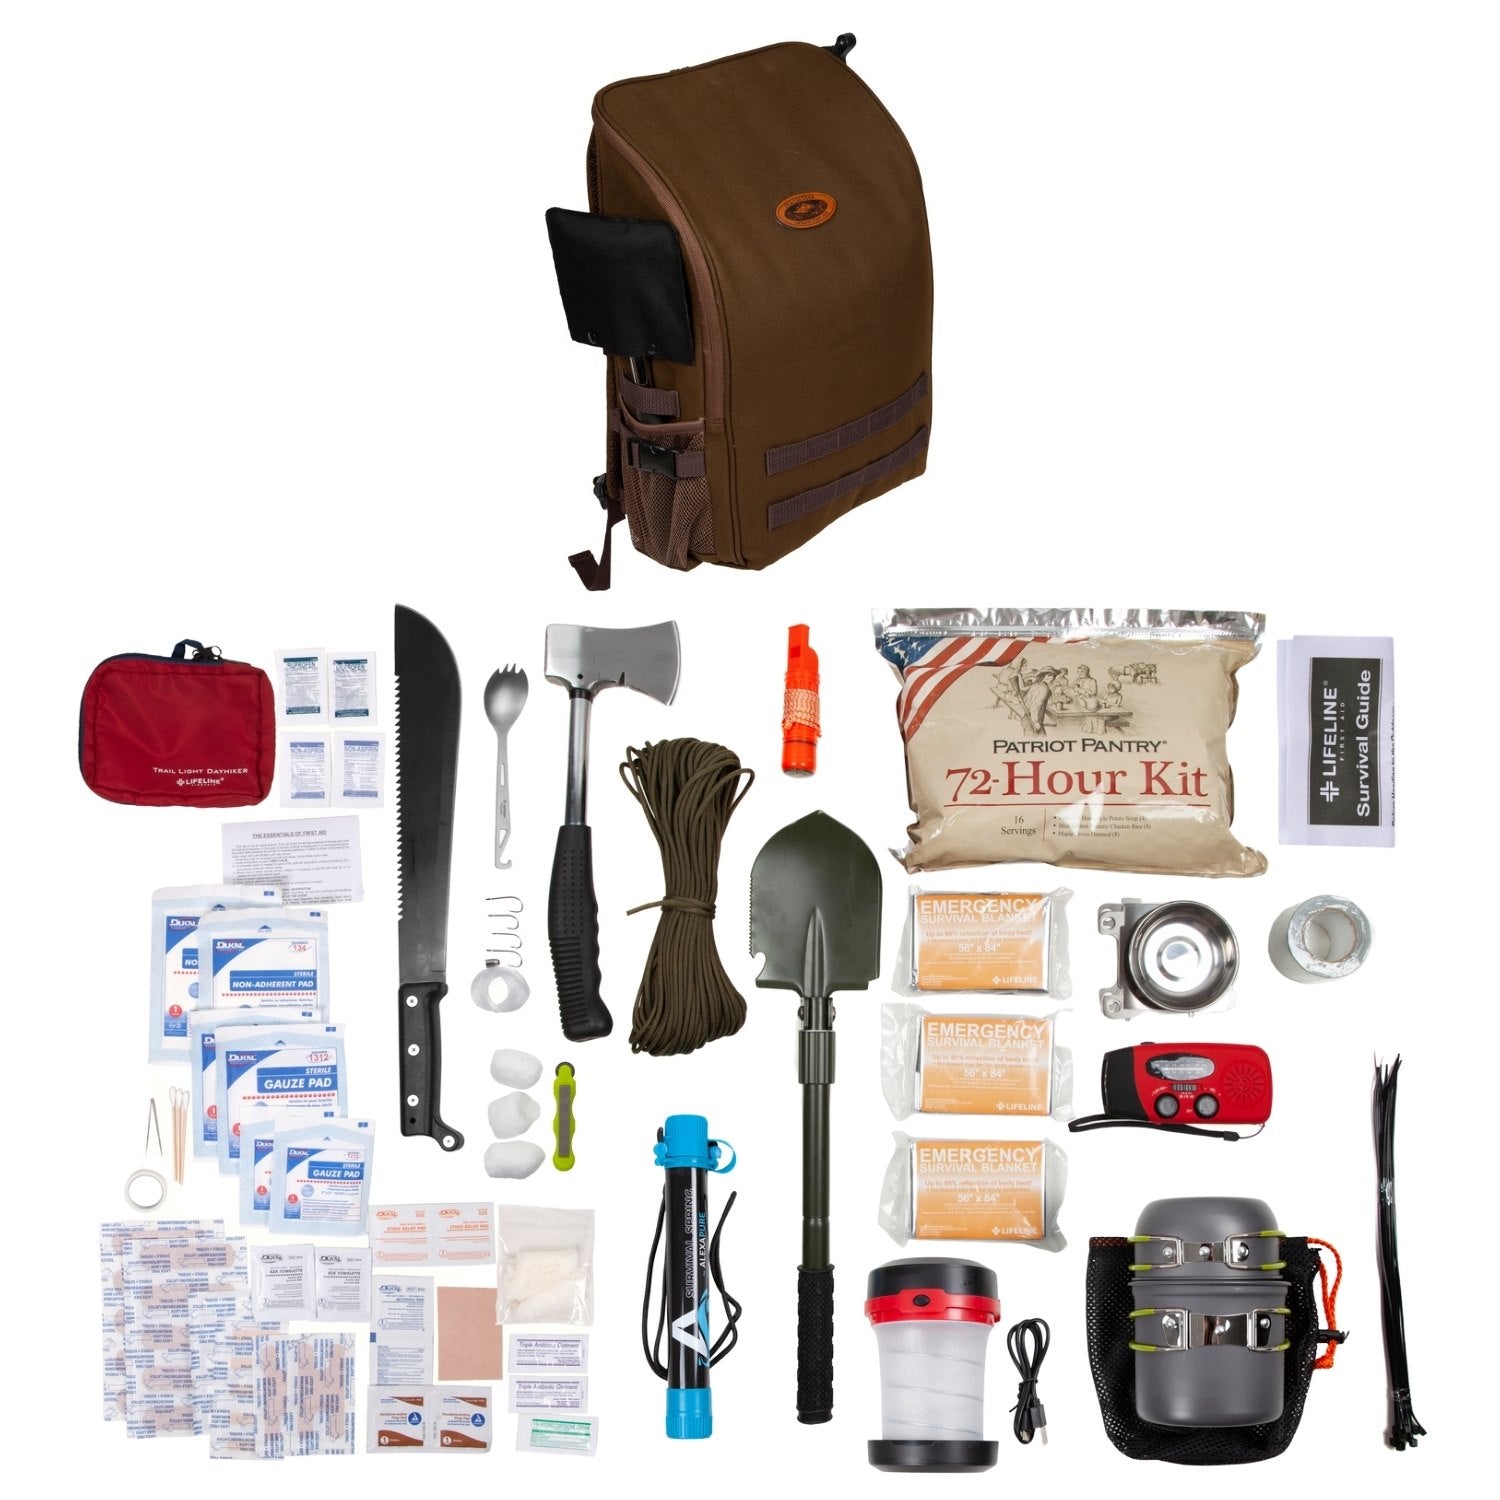 Lifeline 4101 Trailsetter Tactical Survival Kit